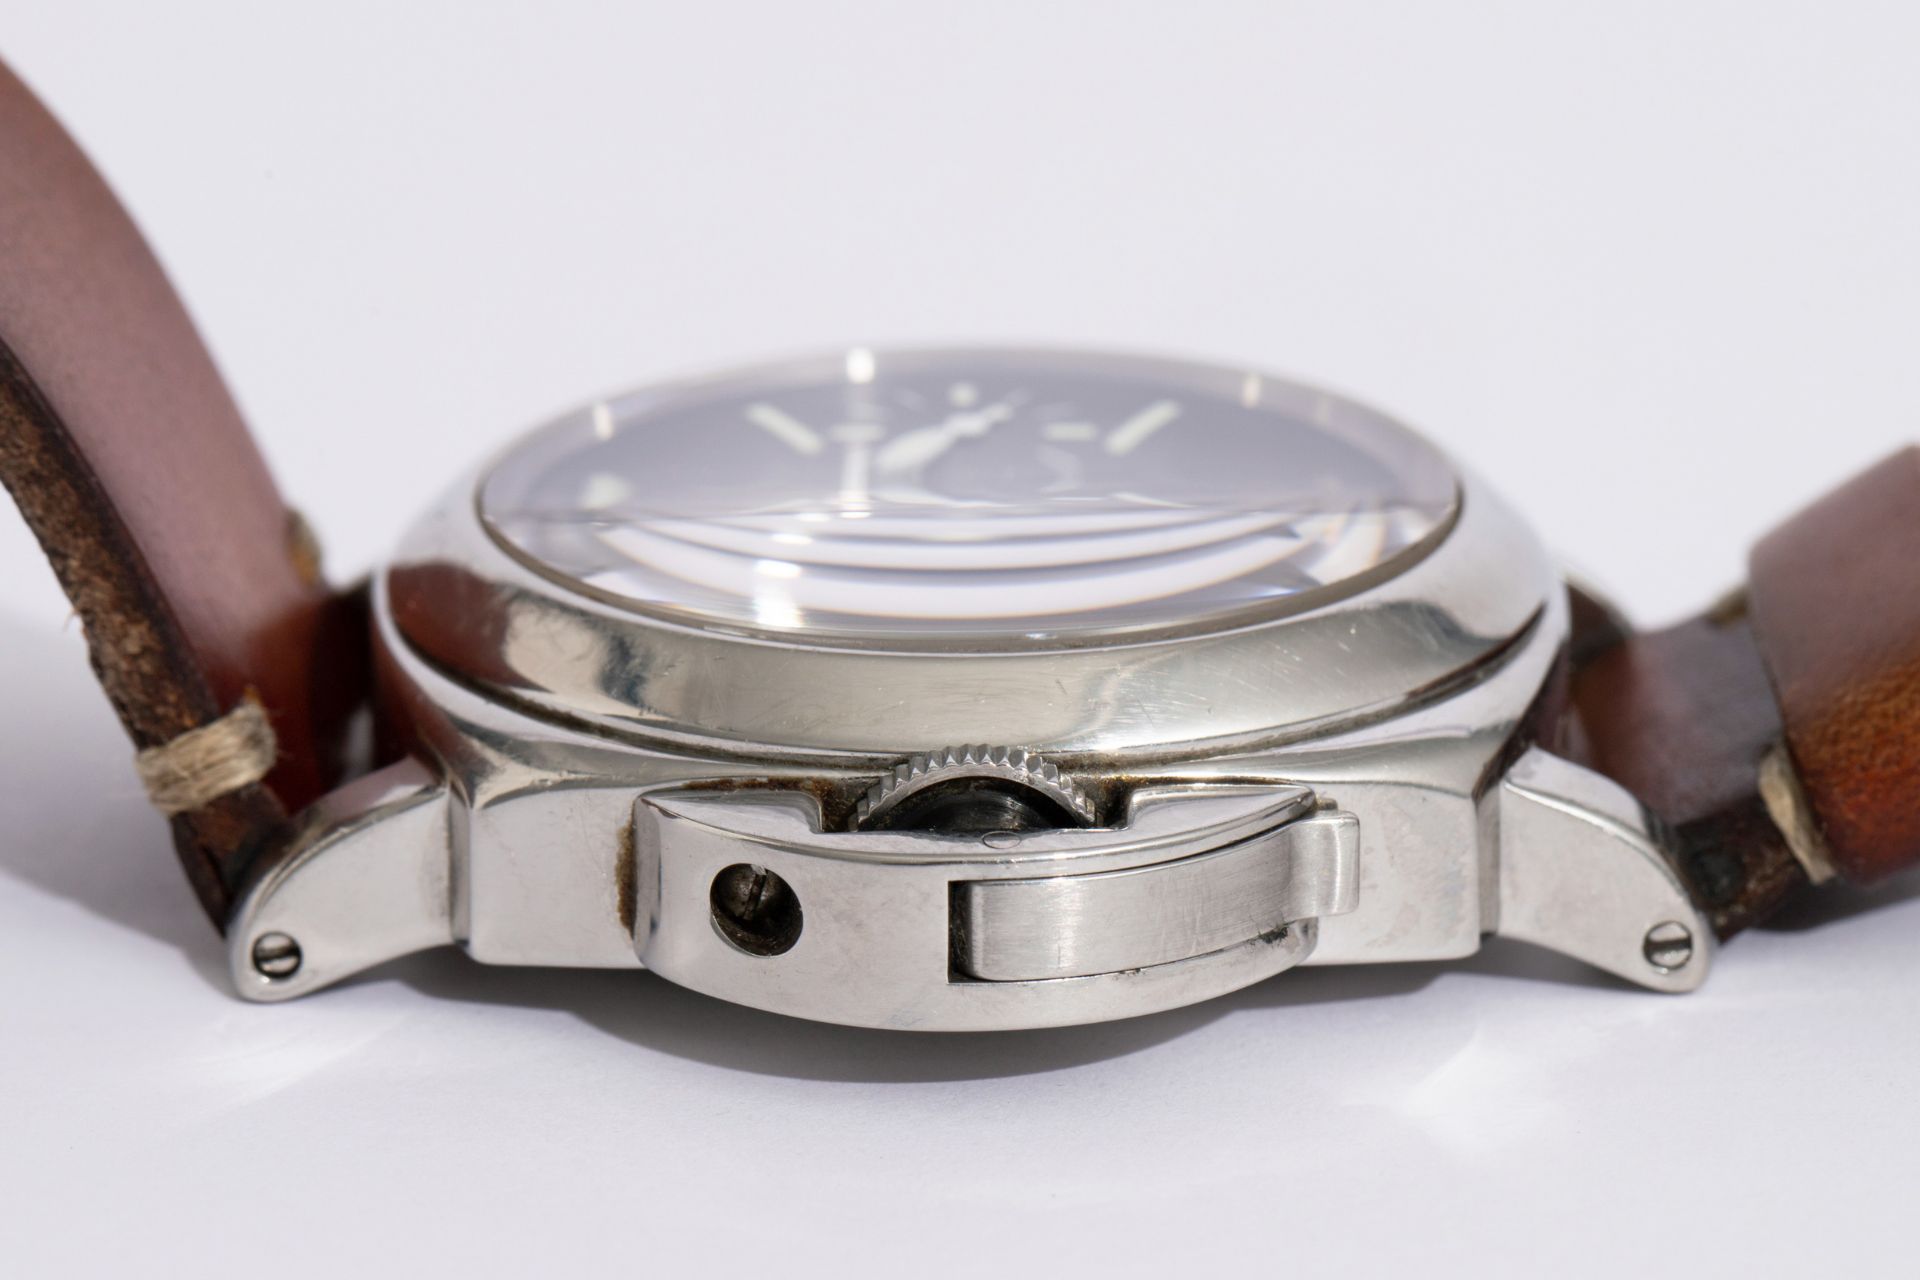 Panerai Luminor Marina PAM 00001 Wristwatch - Image 8 of 12